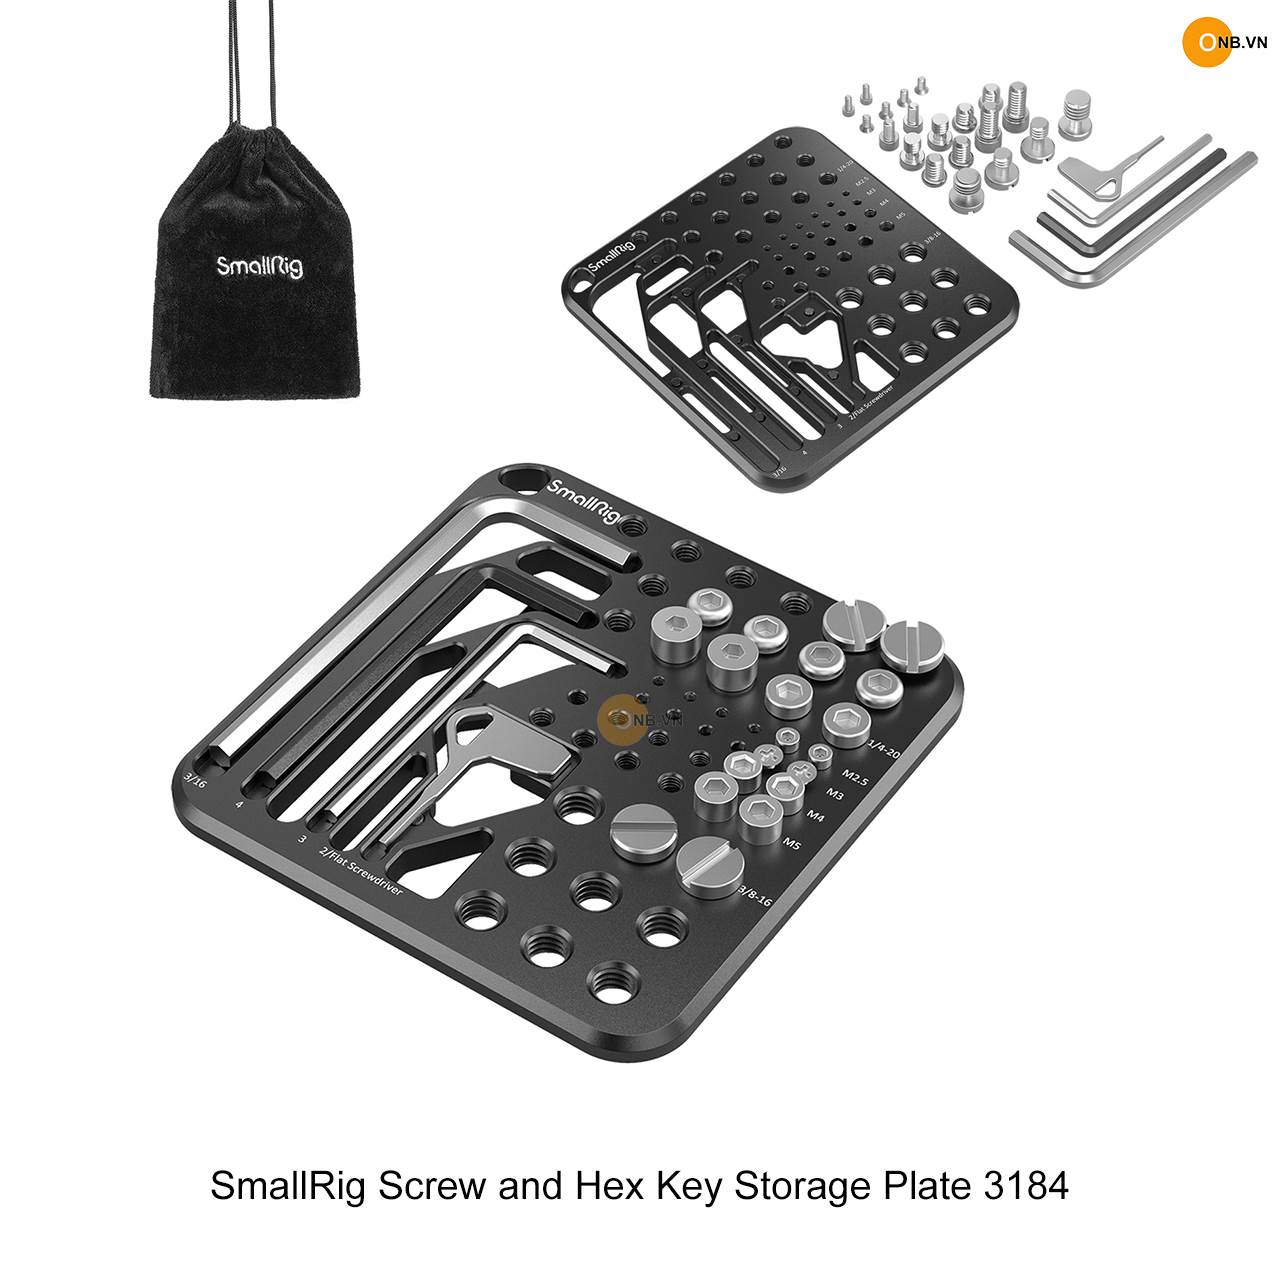 SmallRig Screw Tool and Hex Key Storage Plate 3184